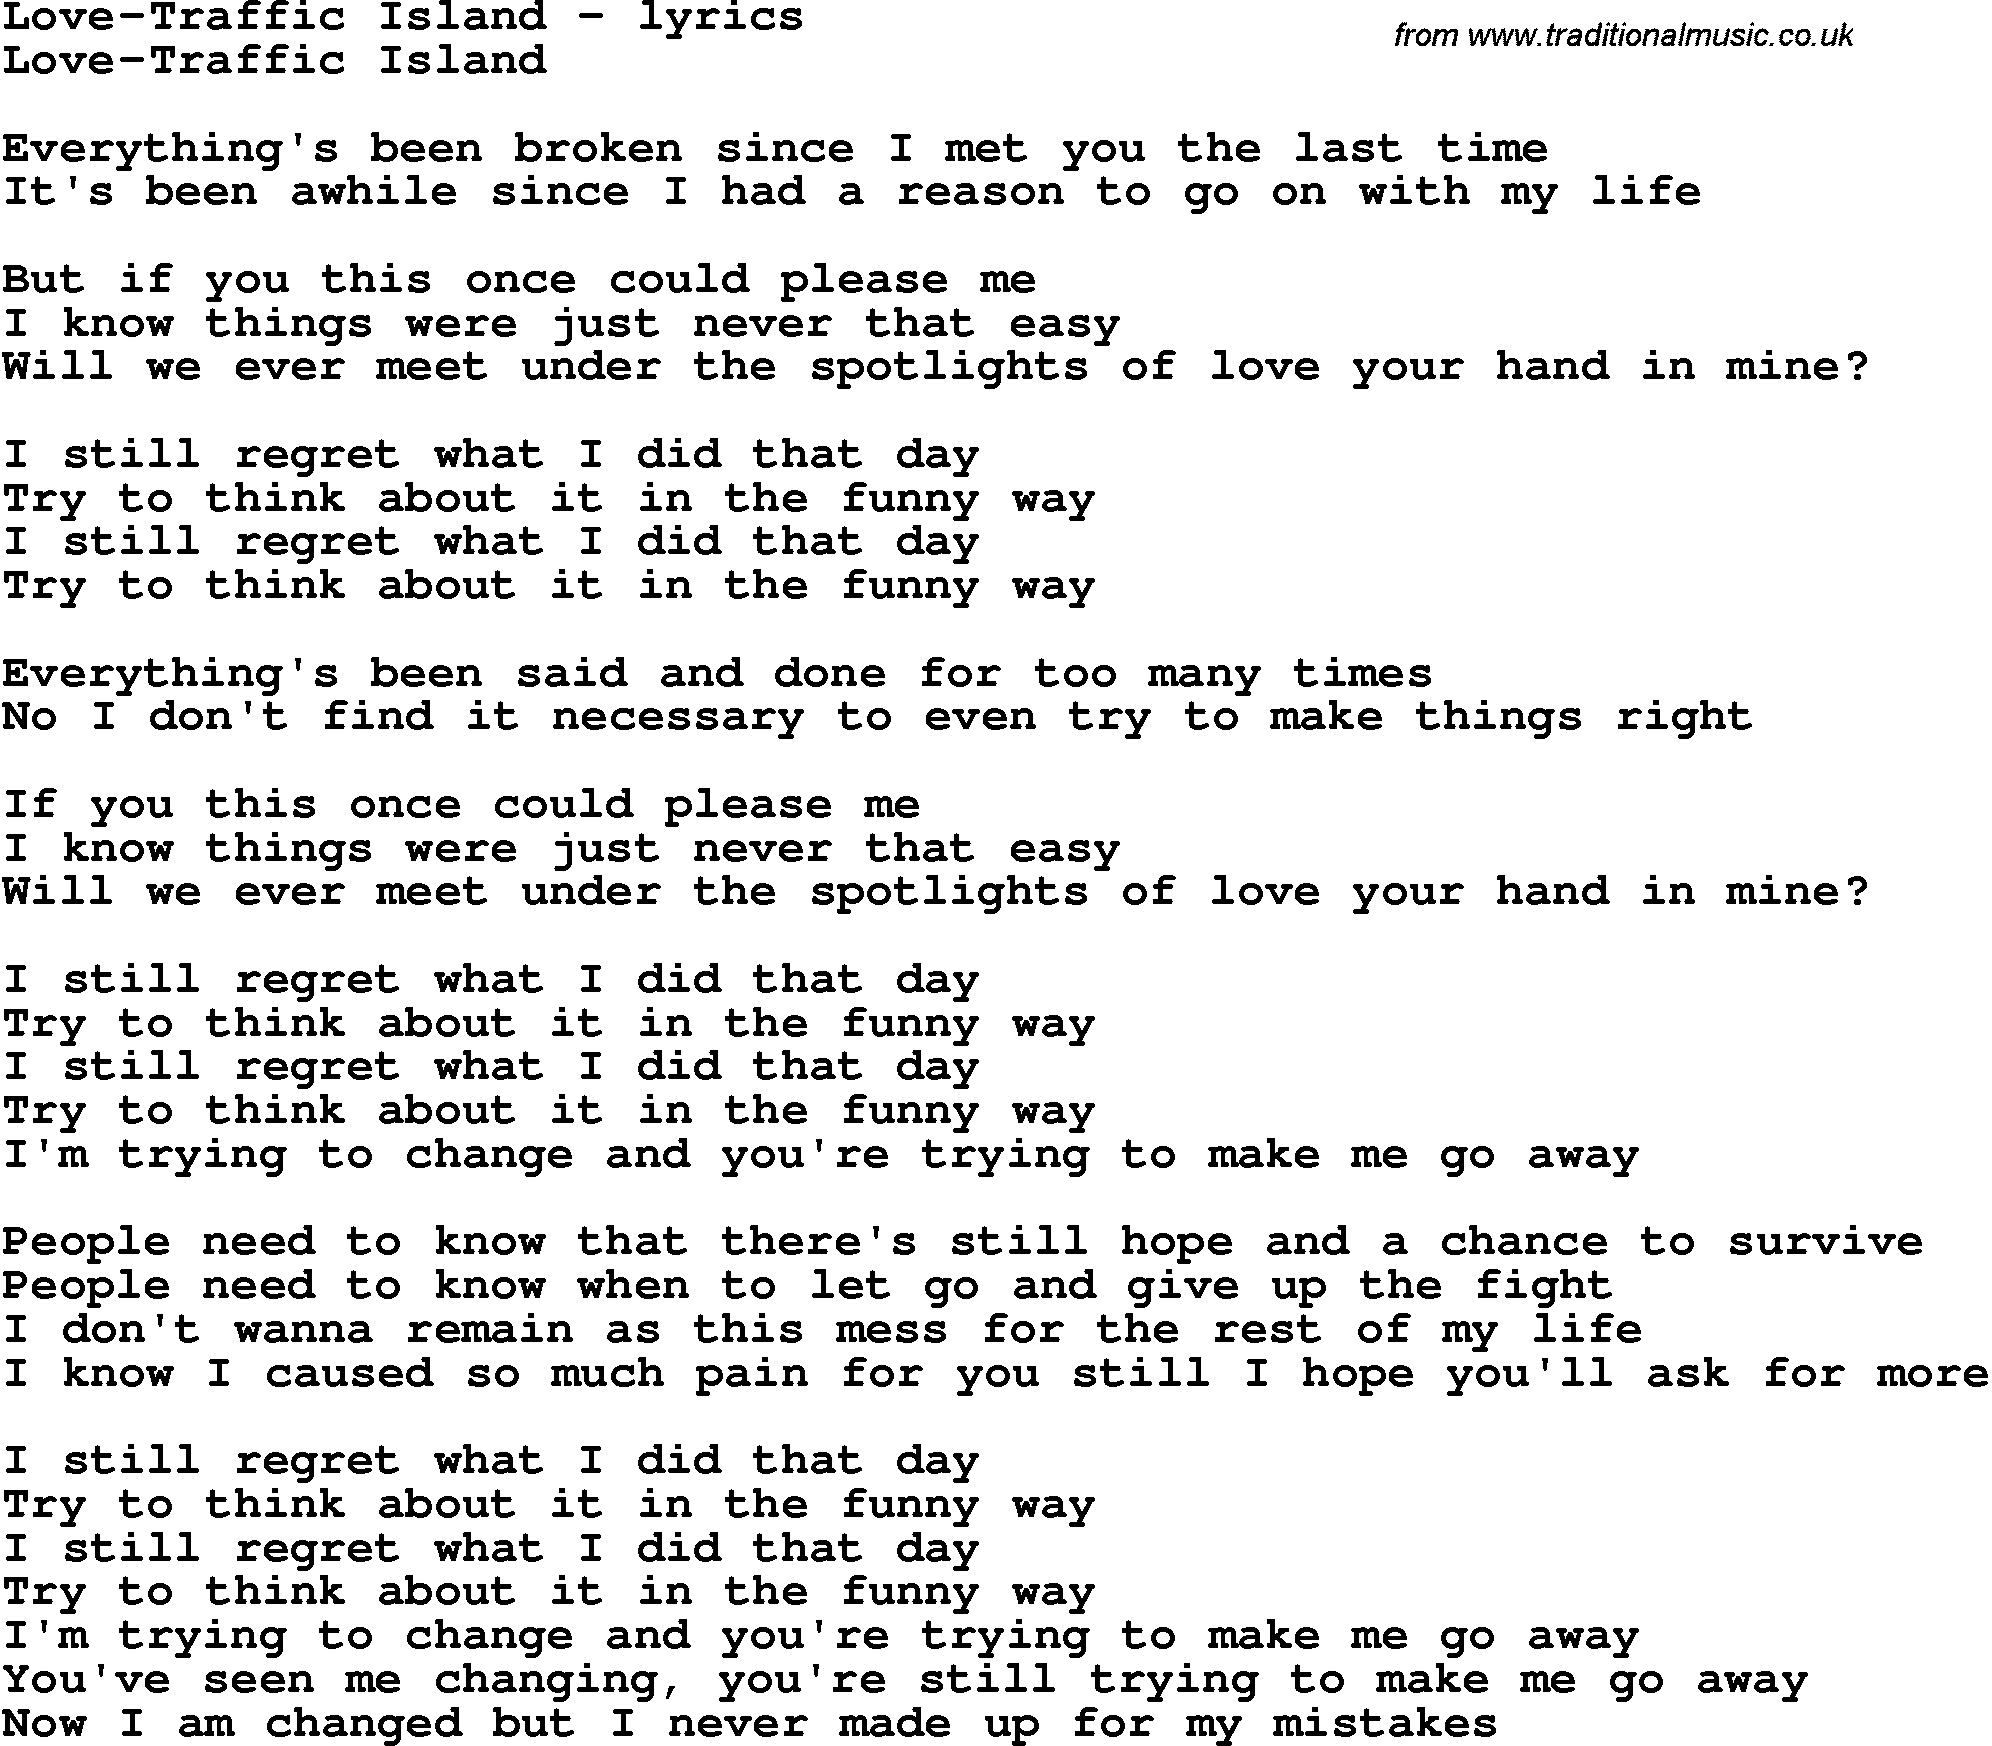 Love Song Lyrics for: Love-Traffic Island